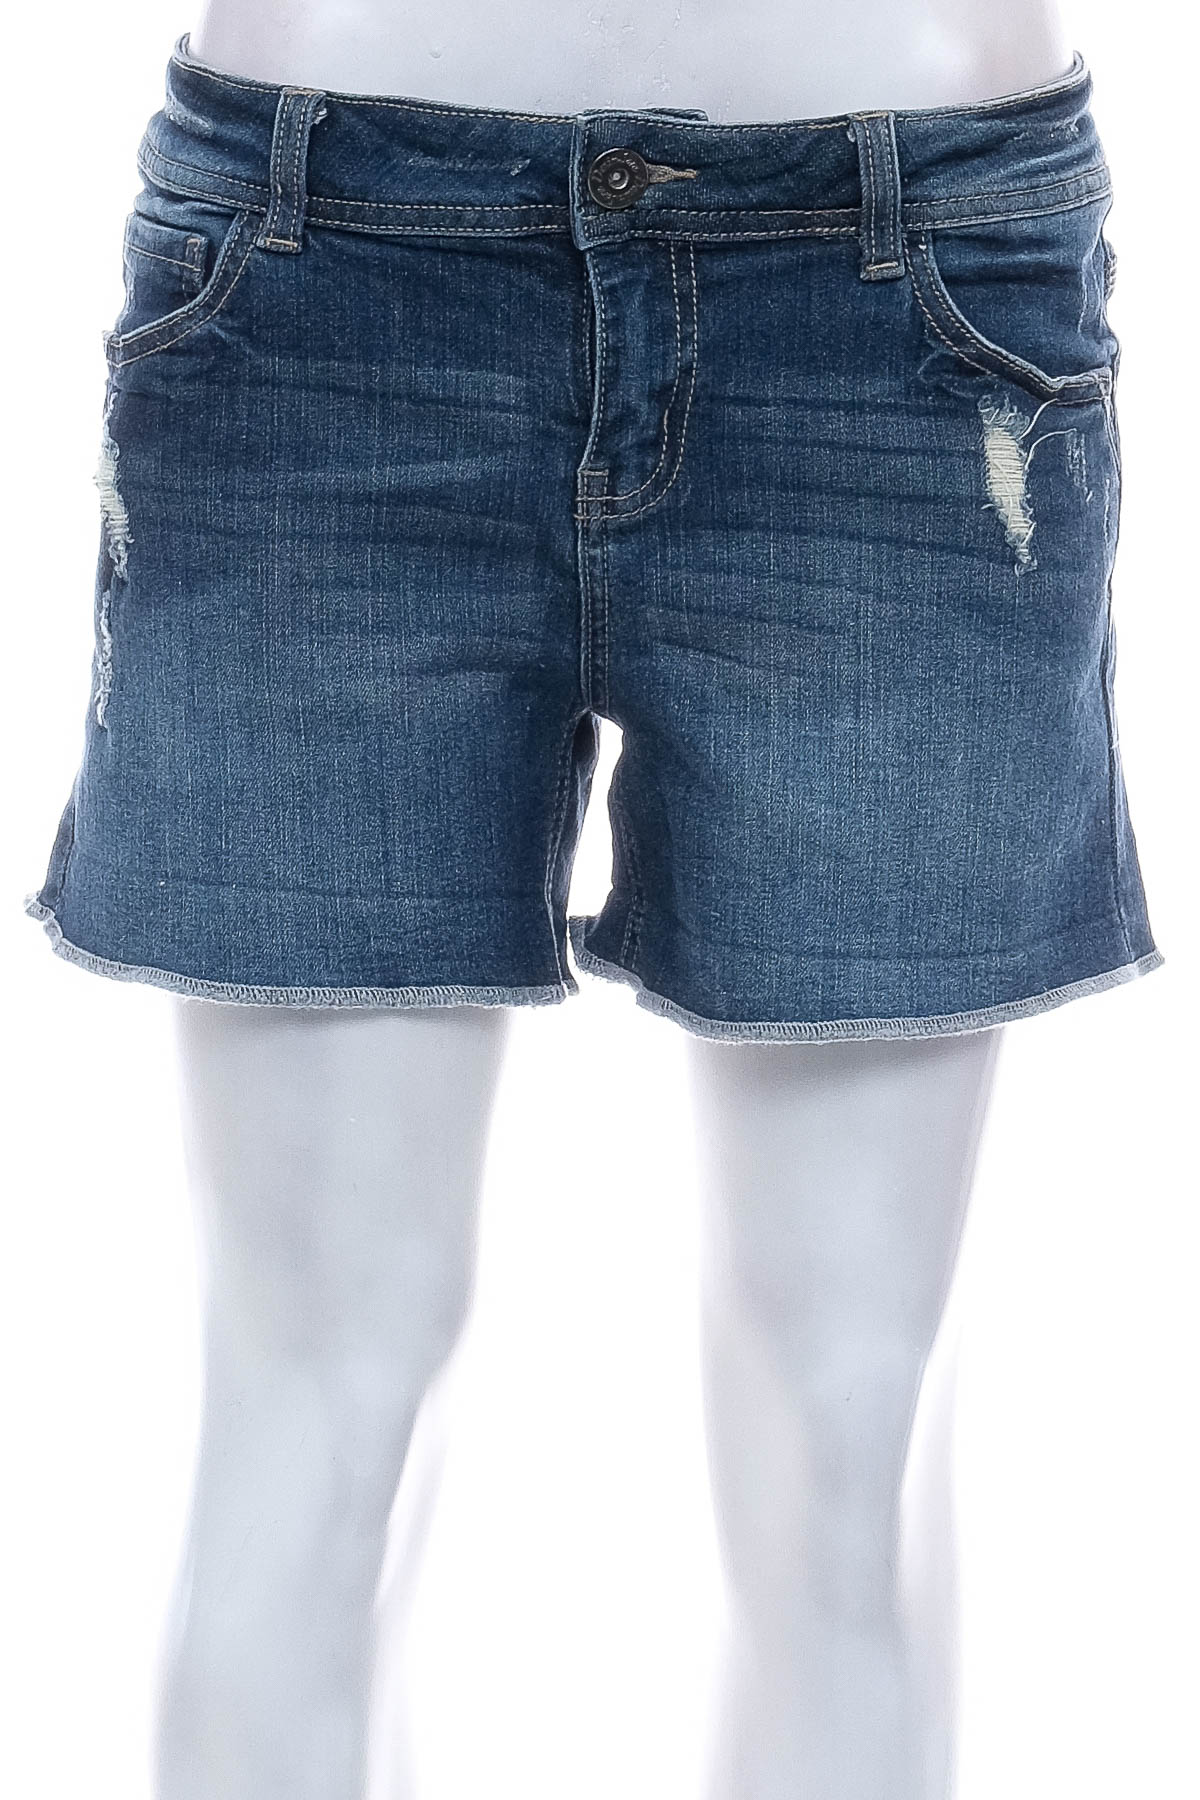 Female shorts - Sora by jbc - 0